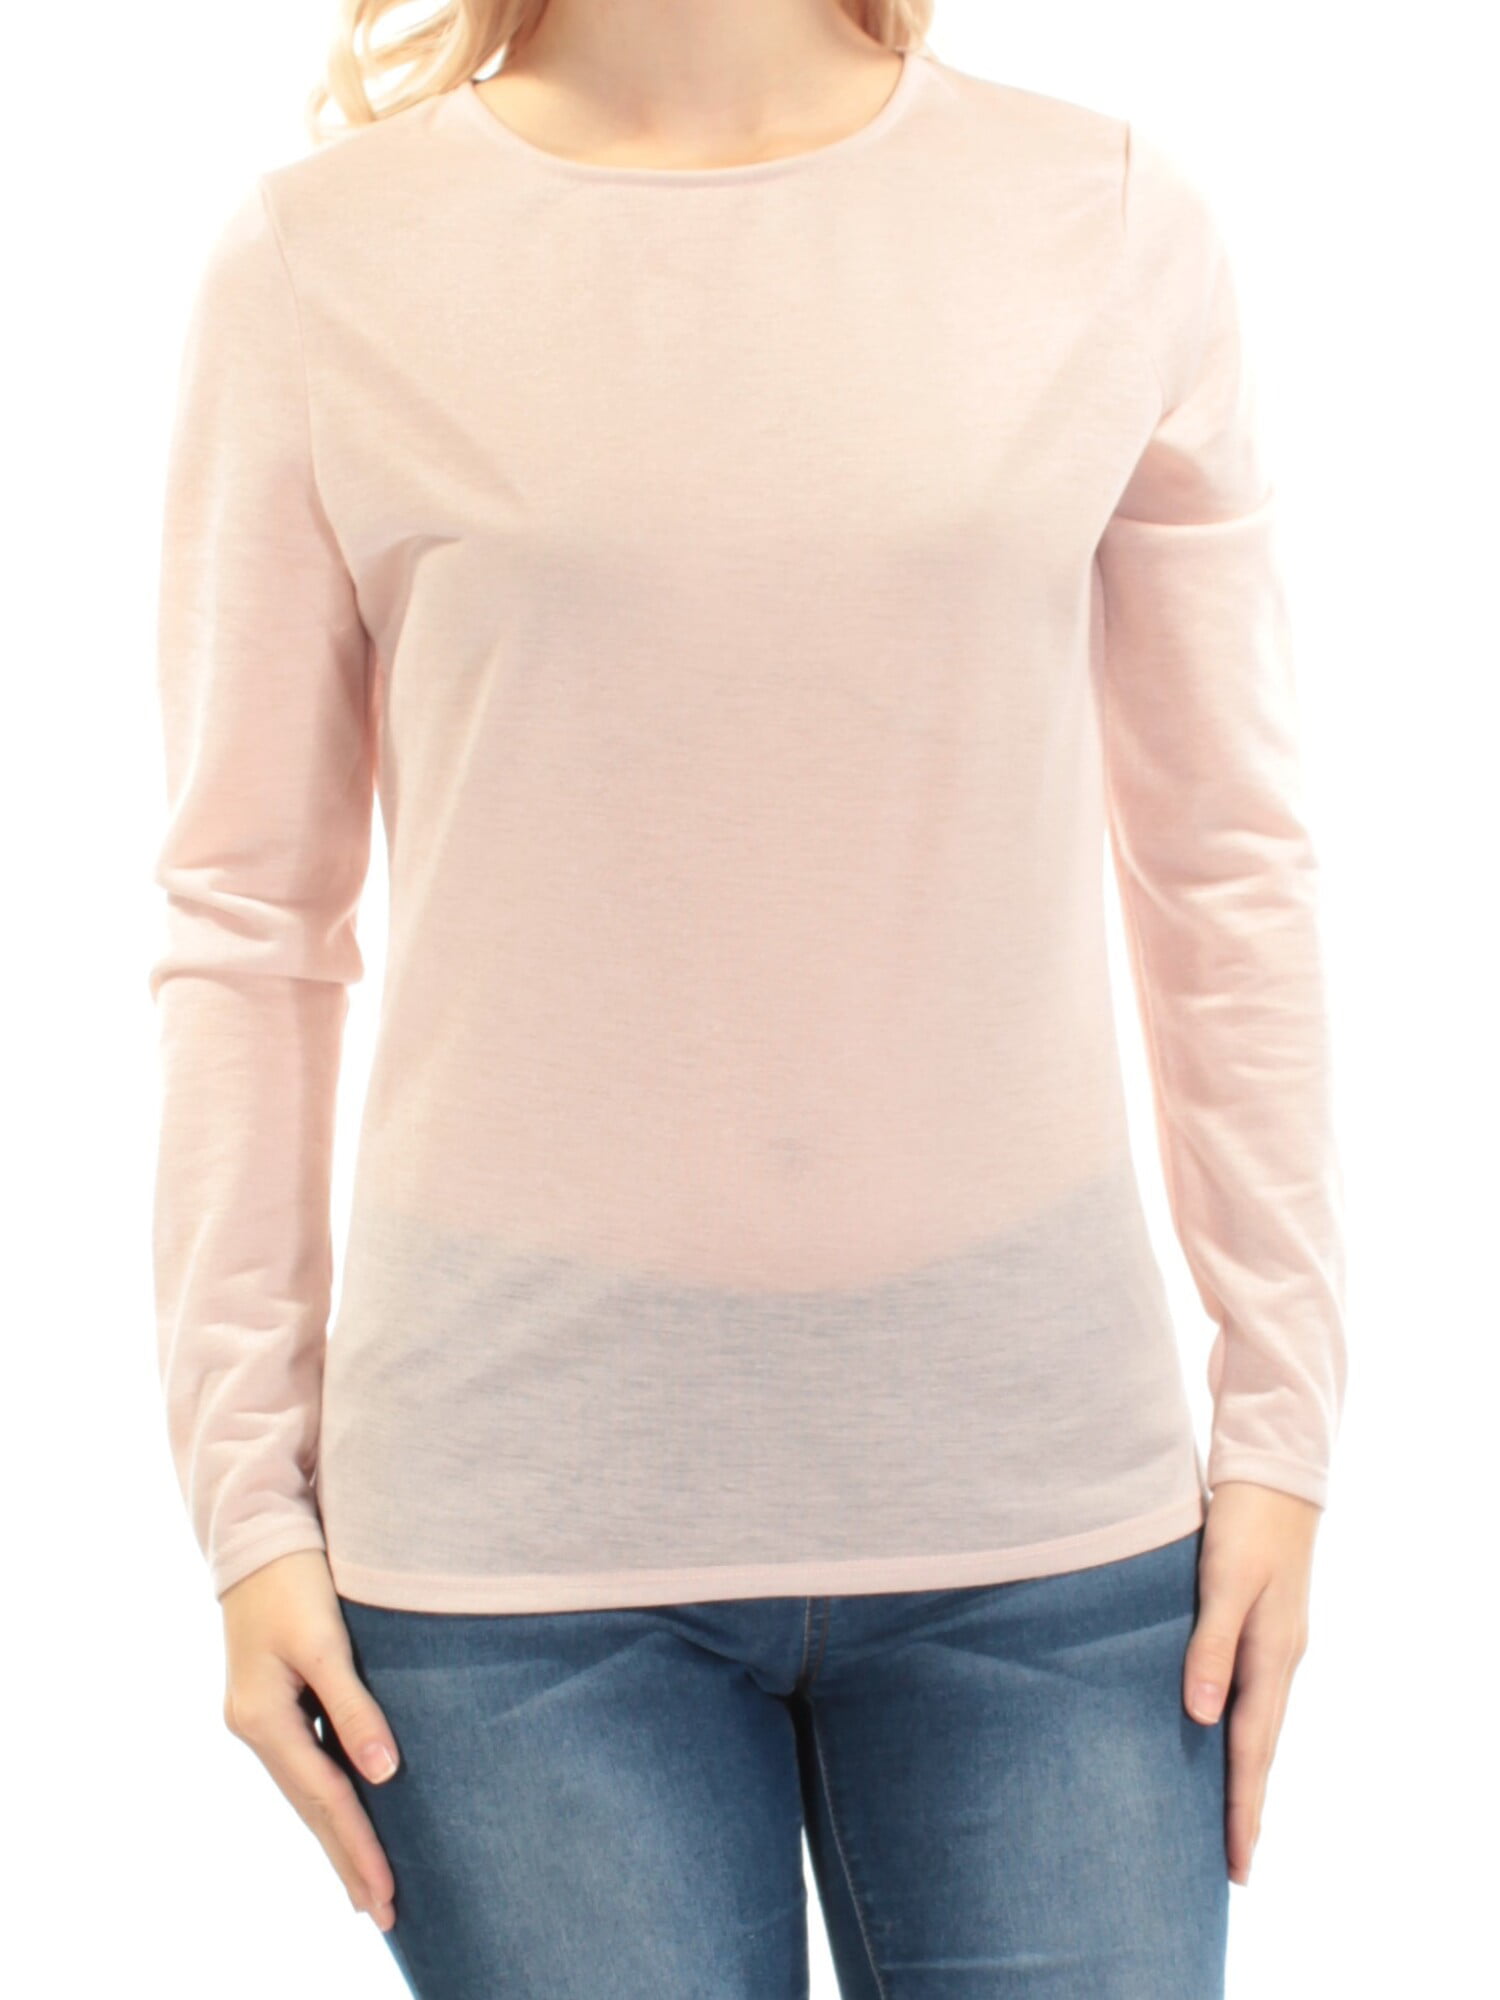 Eksperiment form skotsk GUESS Womens Pink Sheer Without Cami Long Sleeve Jewel Neck Top Size: S -  Walmart.com